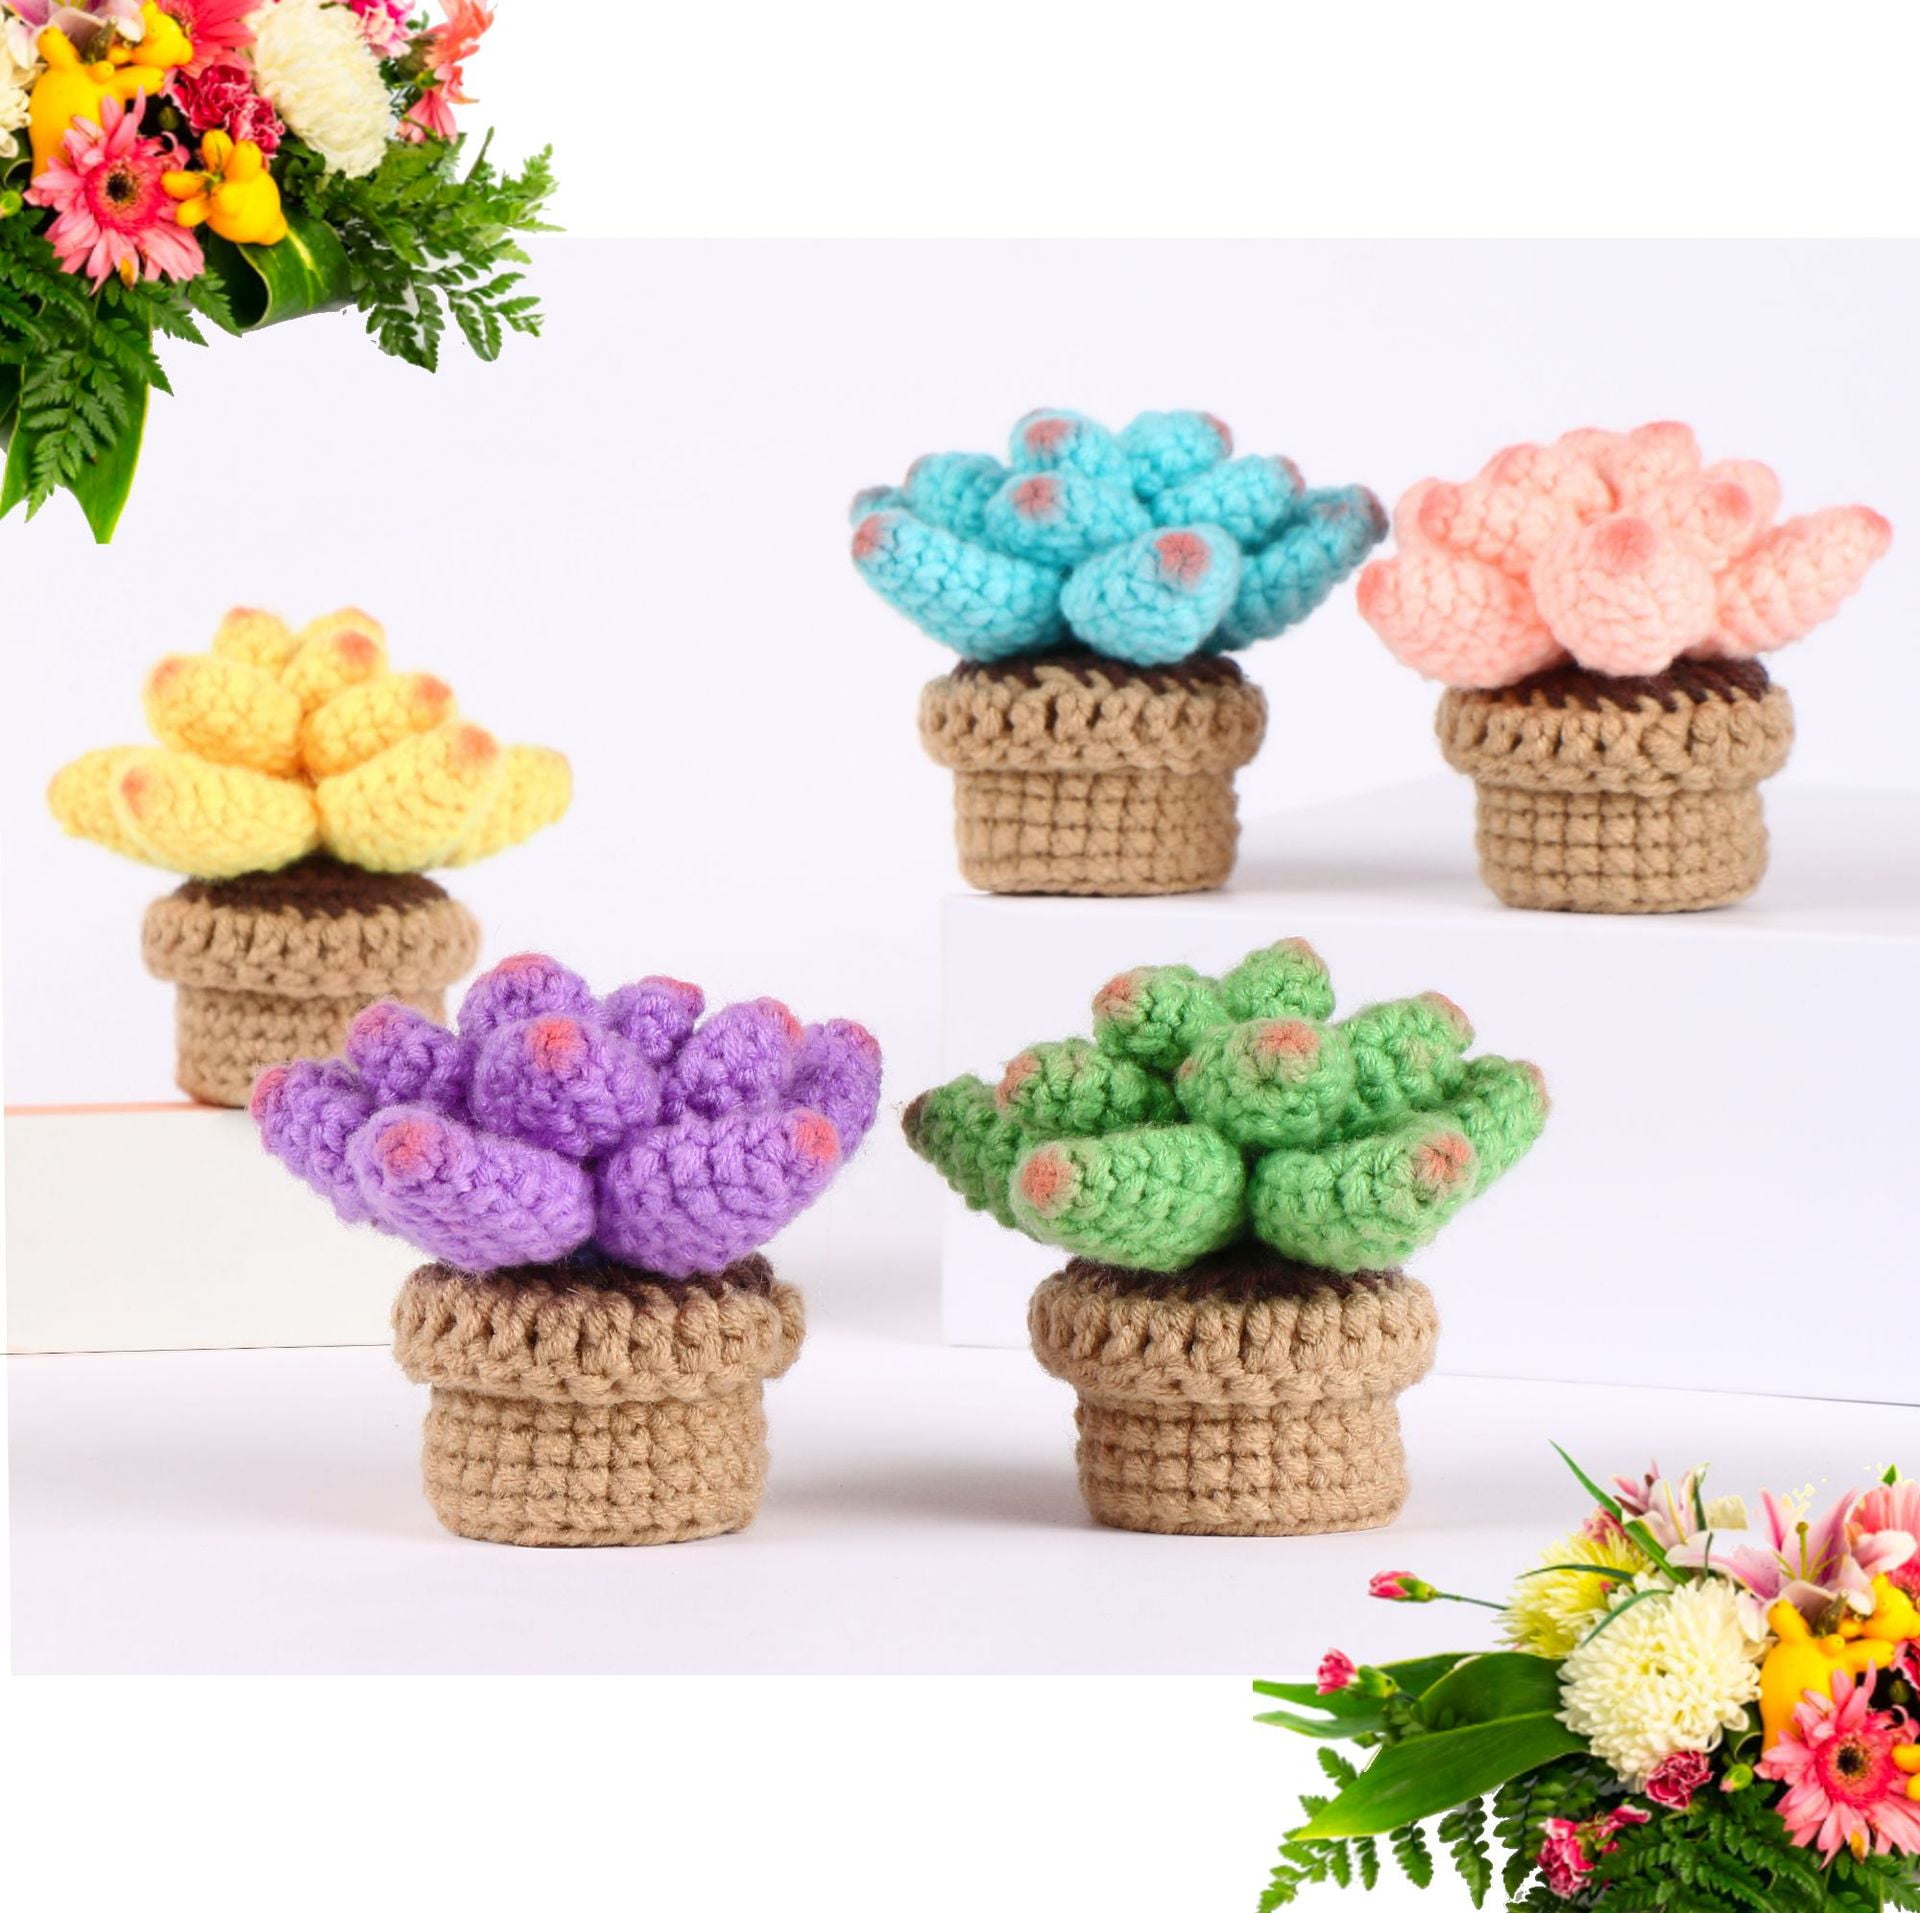 Baiyou crochet kit for beginners - 4pcs succulents, beginner crochet  starter kit for complete beginners adults, crocheting knitting